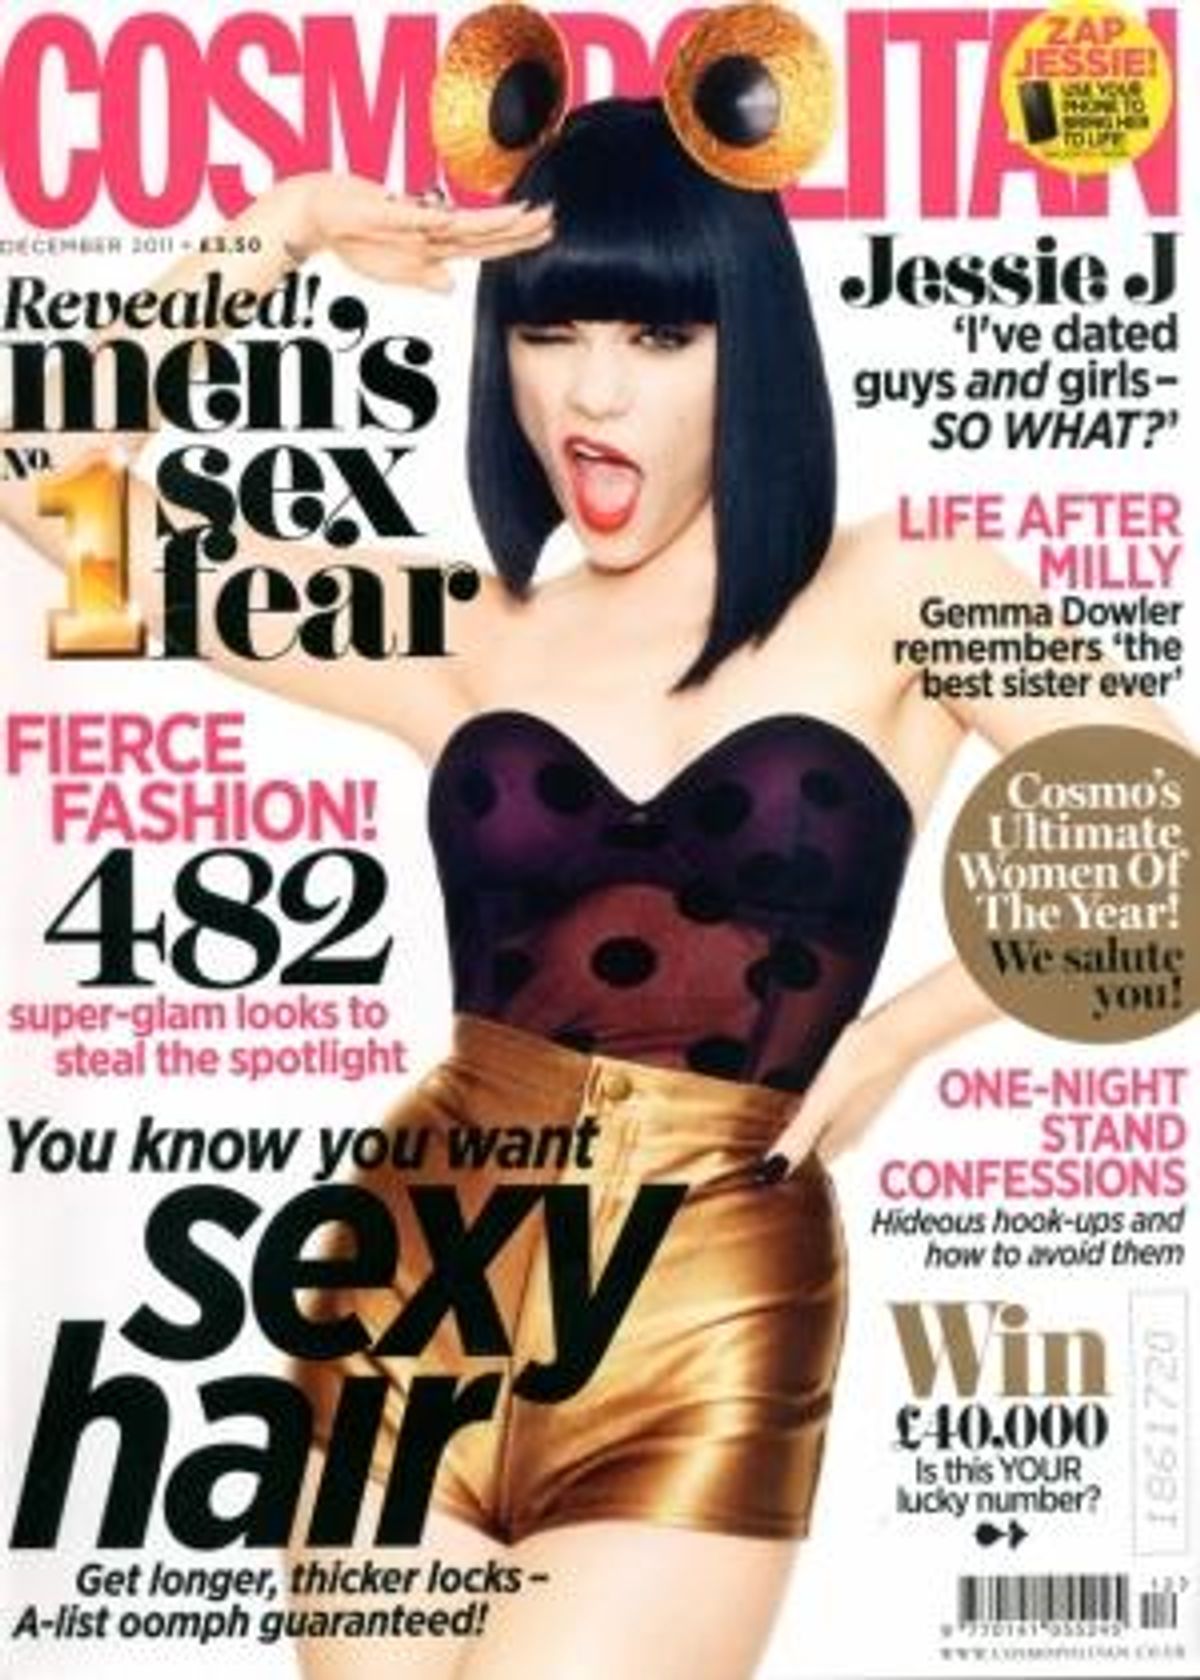  Jessie J: Bisexual Pop Star Looking for Love - Video